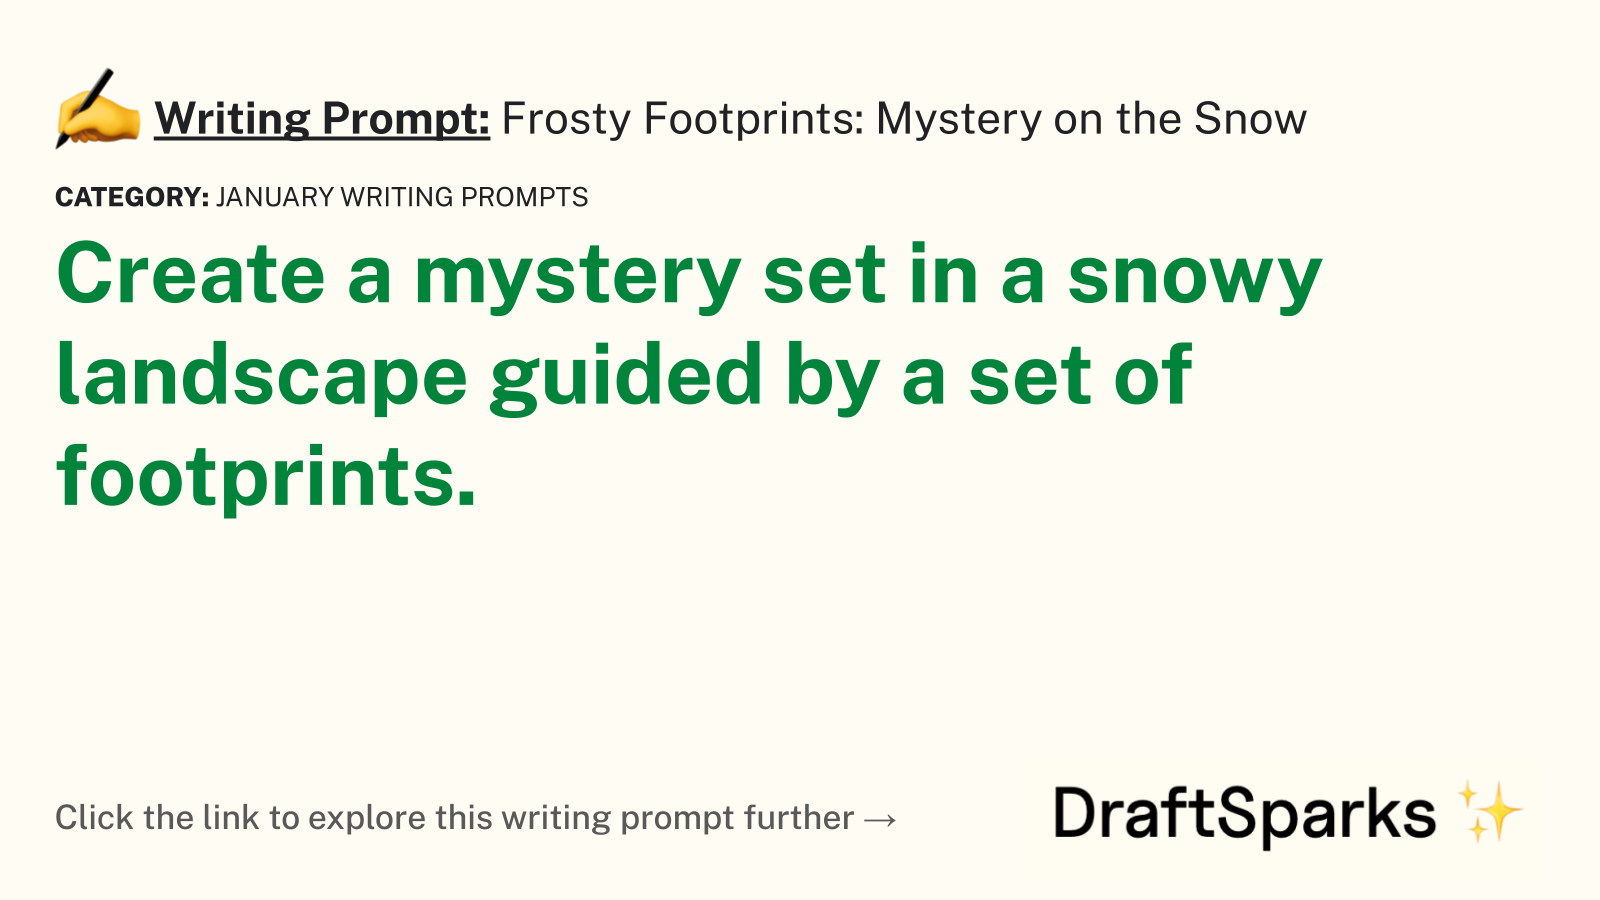 Frosty Footprints: Mystery on the Snow